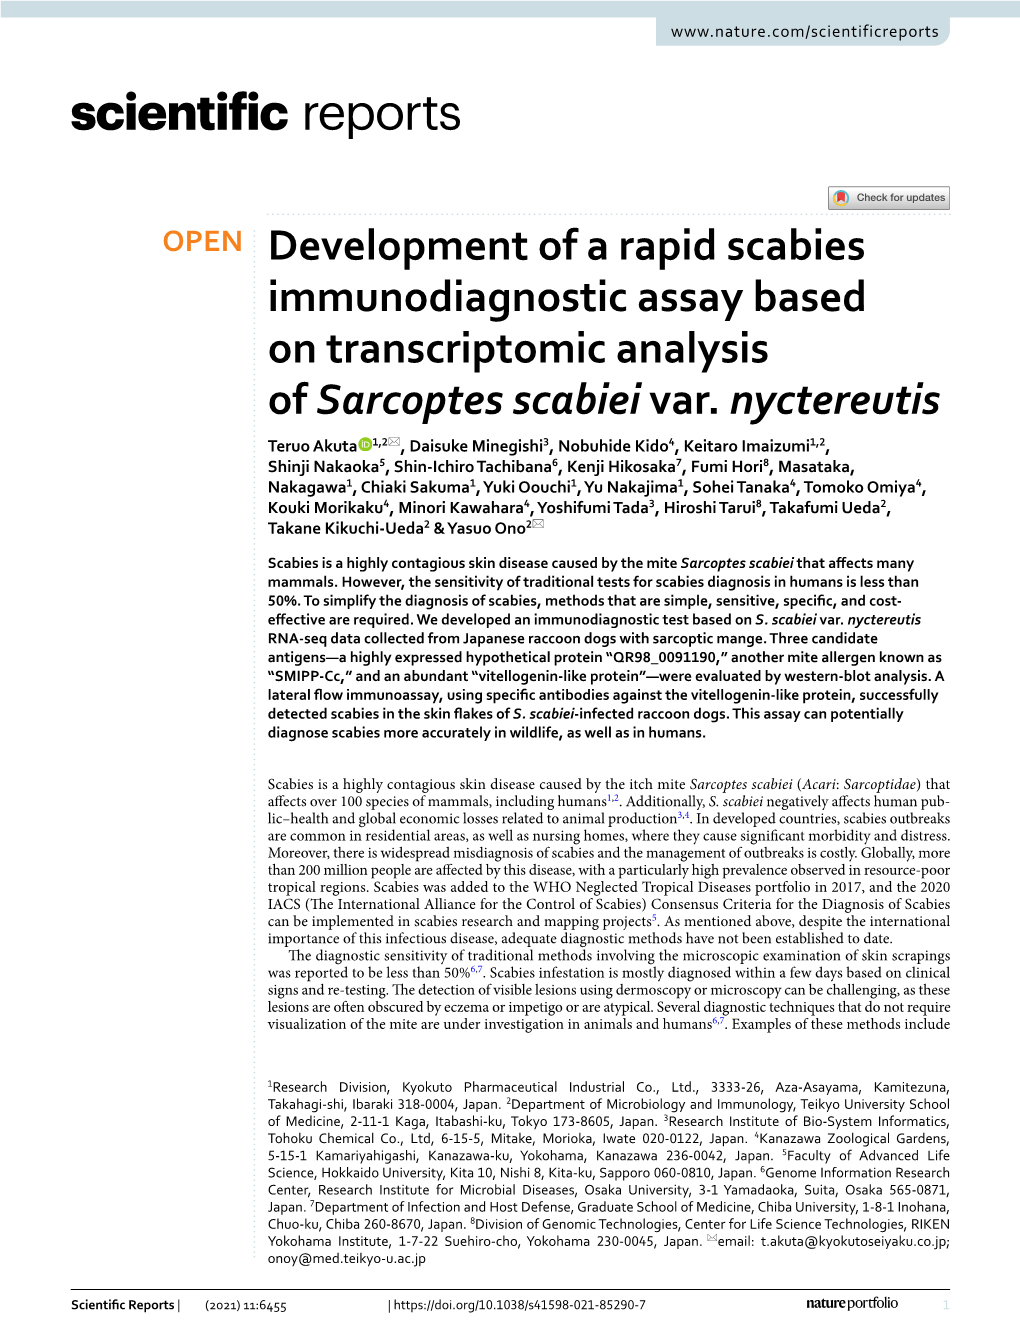 Development of a Rapid Scabies Immunodiagnostic Assay Based on Transcriptomic Analysis of Sarcoptes Scabiei Var